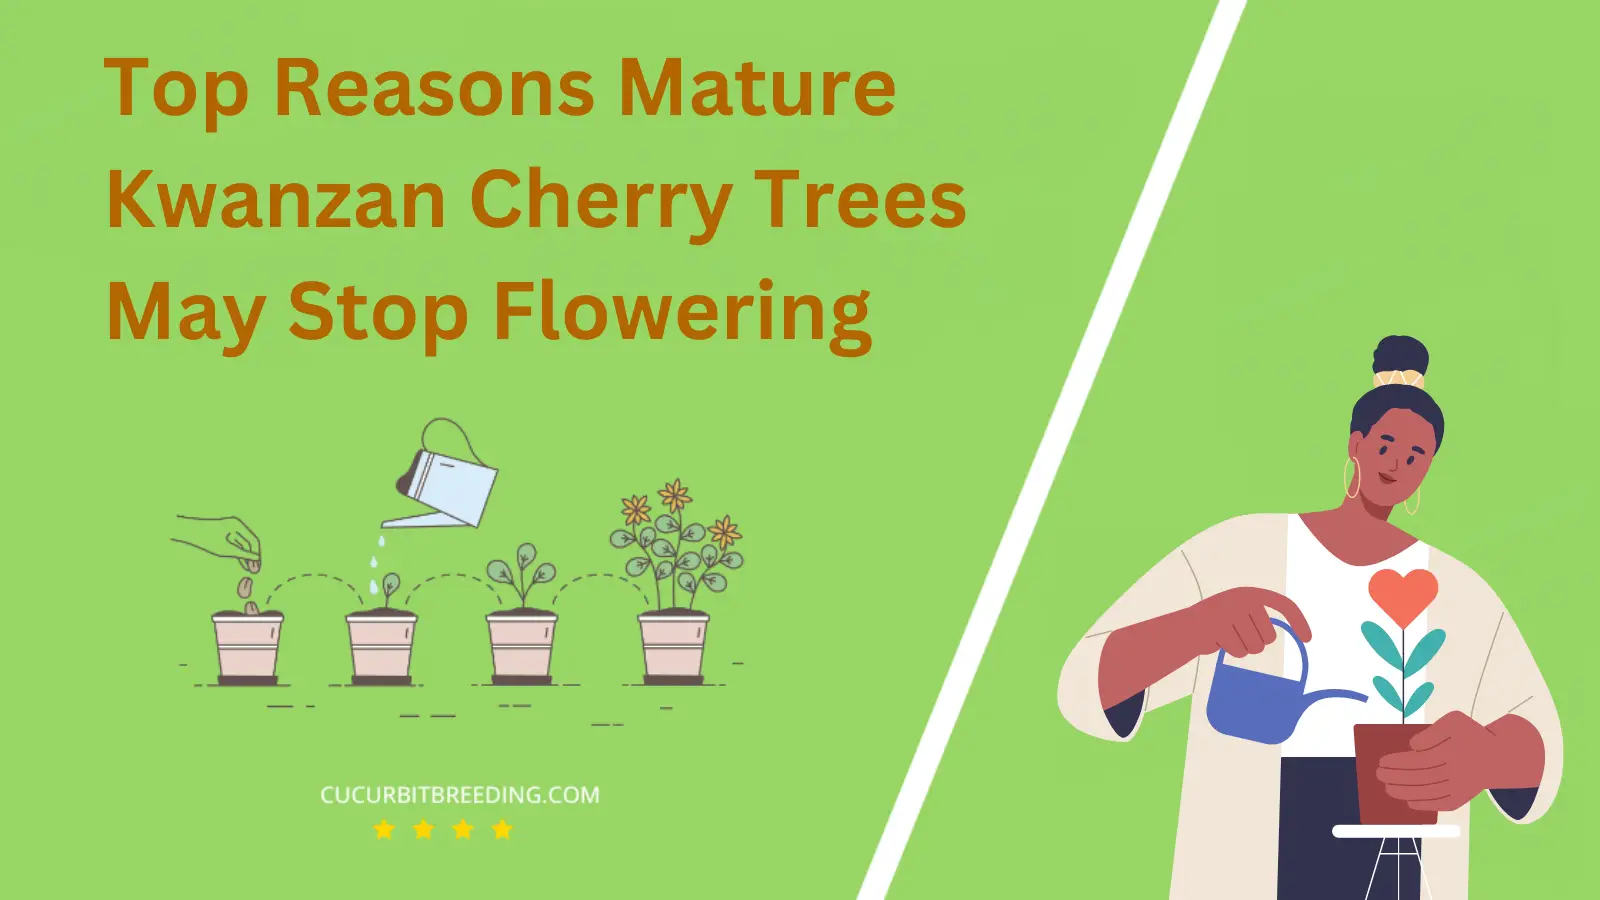 Top Reasons Mature Kwanzan Cherry Trees May Stop Flowering